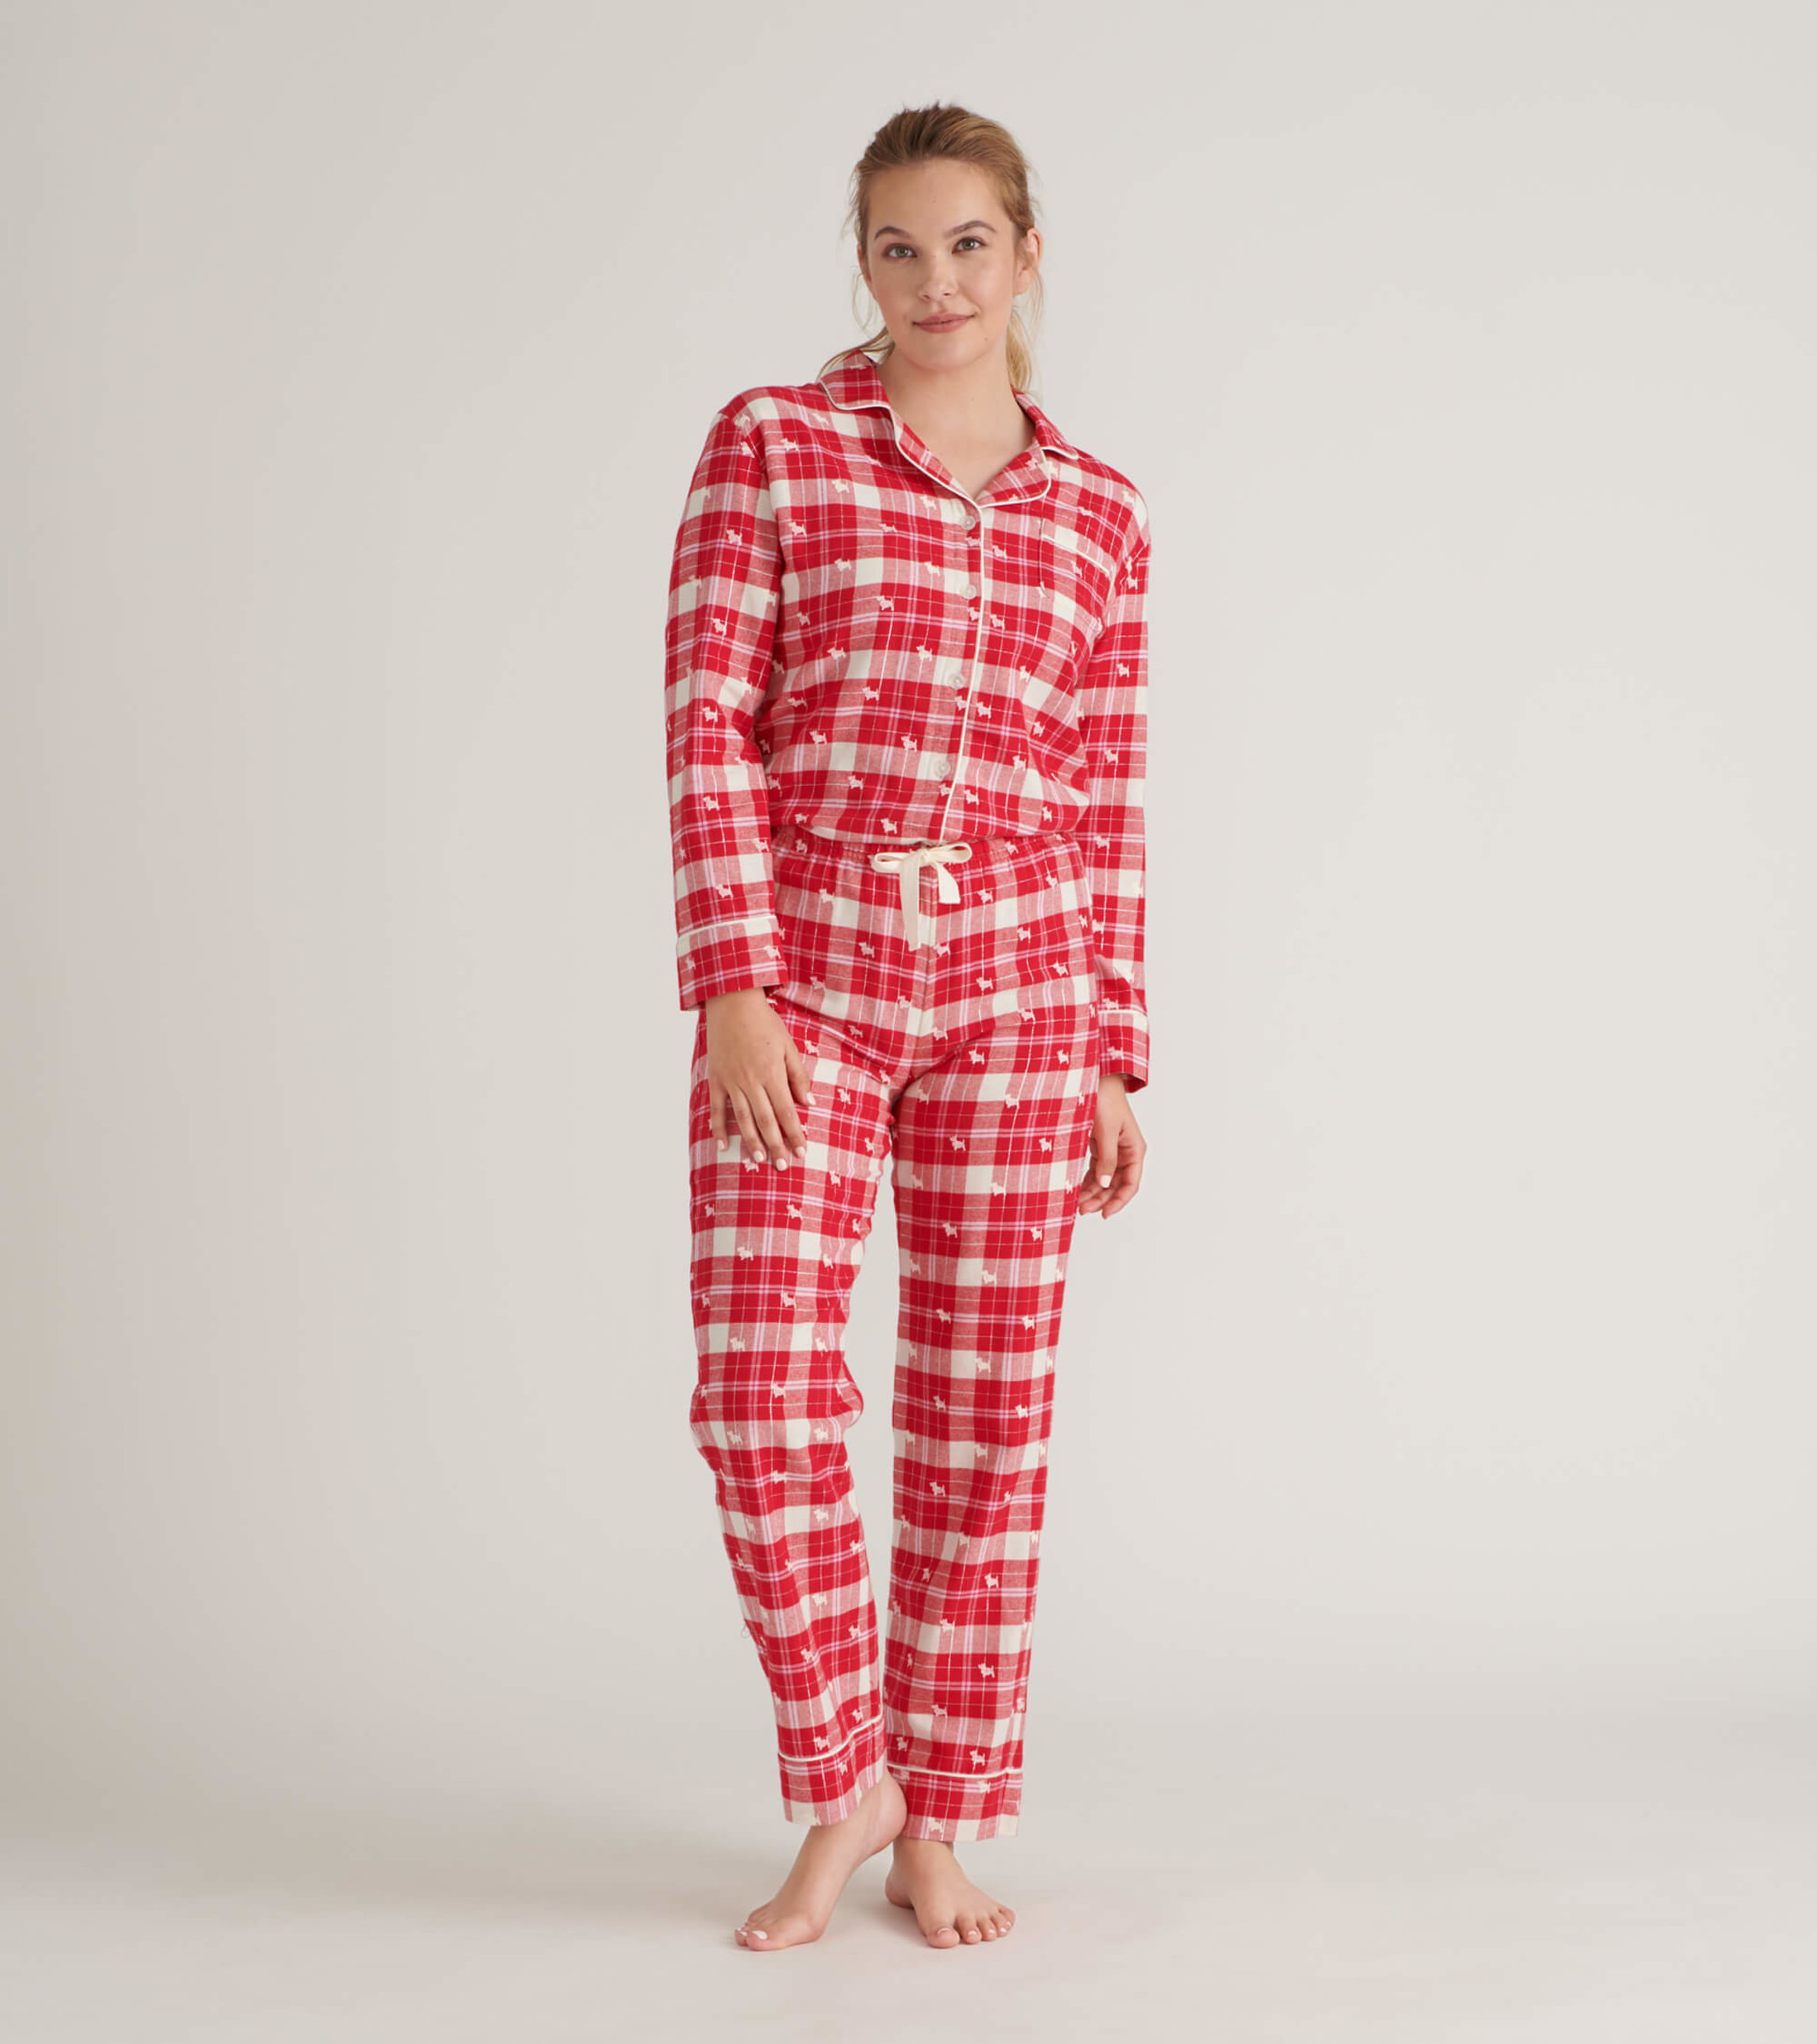 Lisingtool Pajamas for Women Set Women Casual Lapel Button Plaid